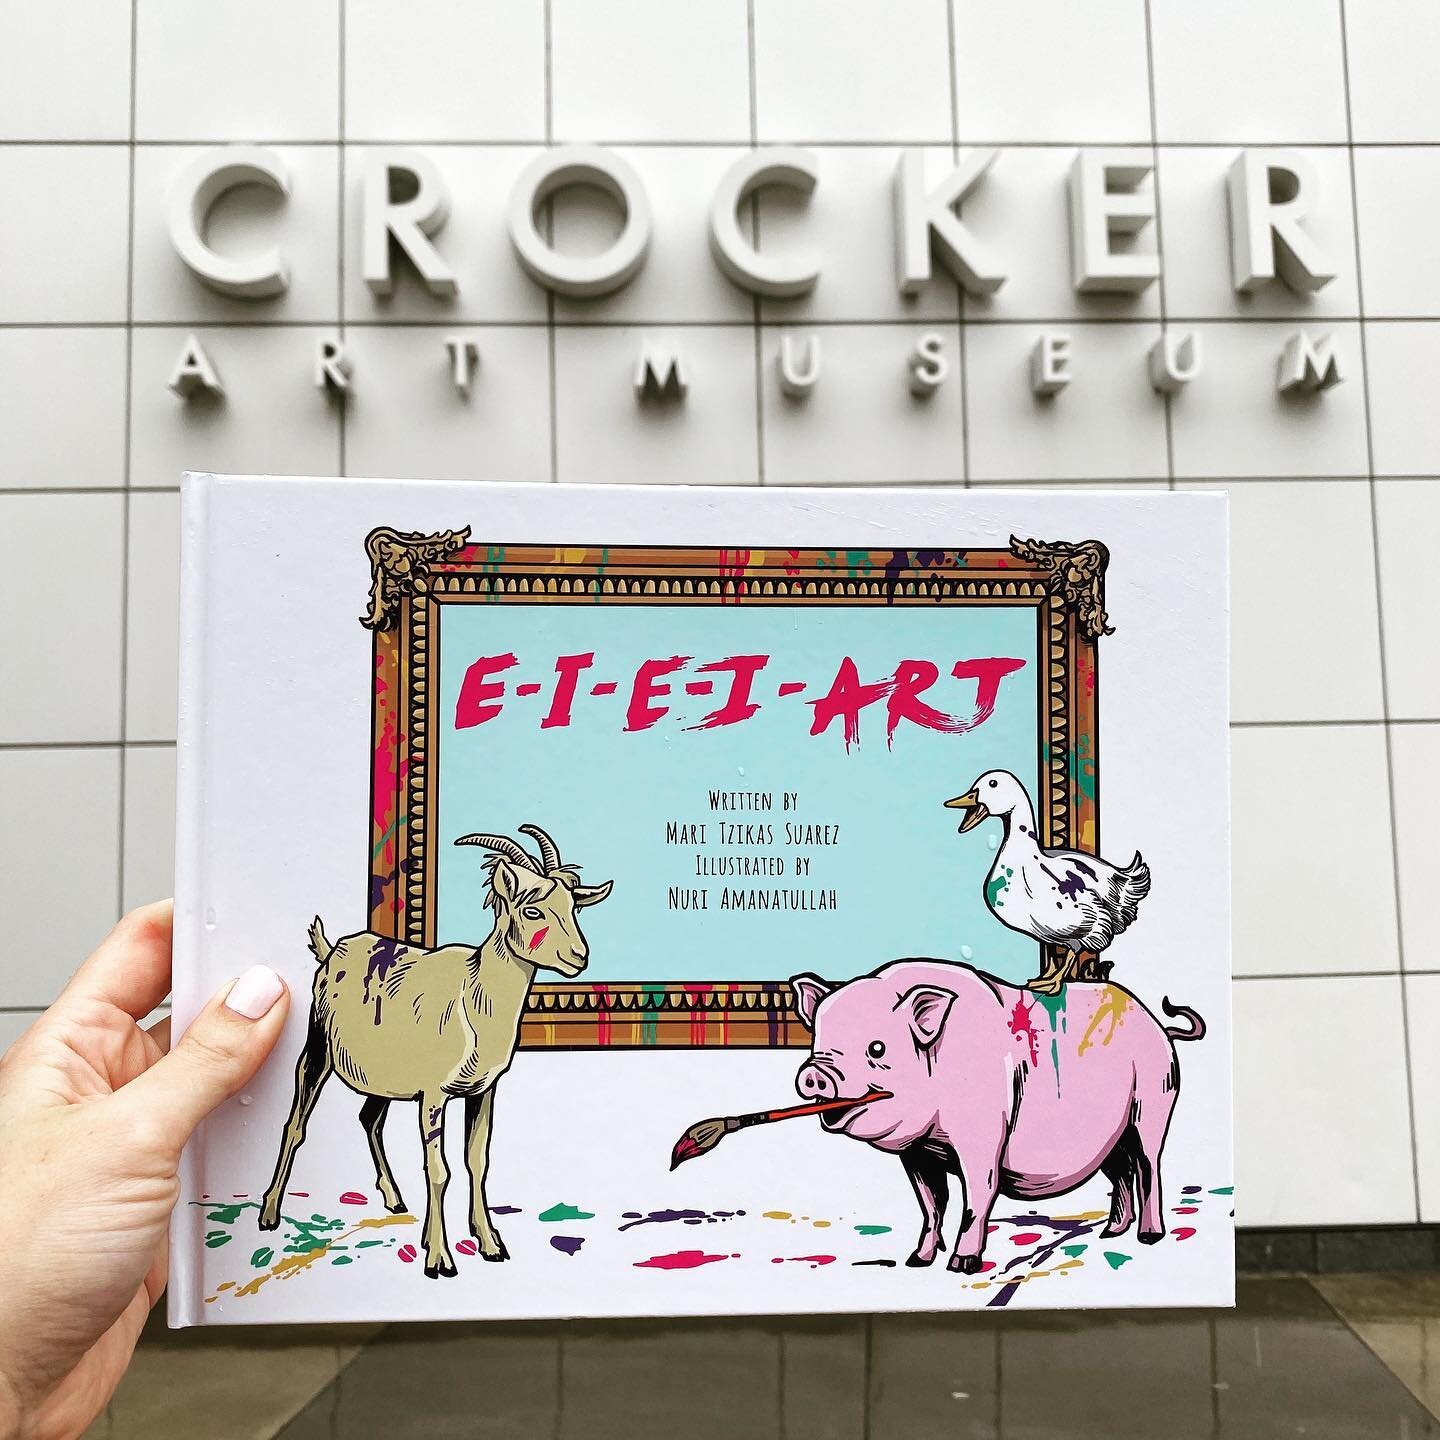 E-I-E-I-ART is officially available at @crockerart store! Shop online at store.crockerart.org #shopmuseumsunday #shopmuseums